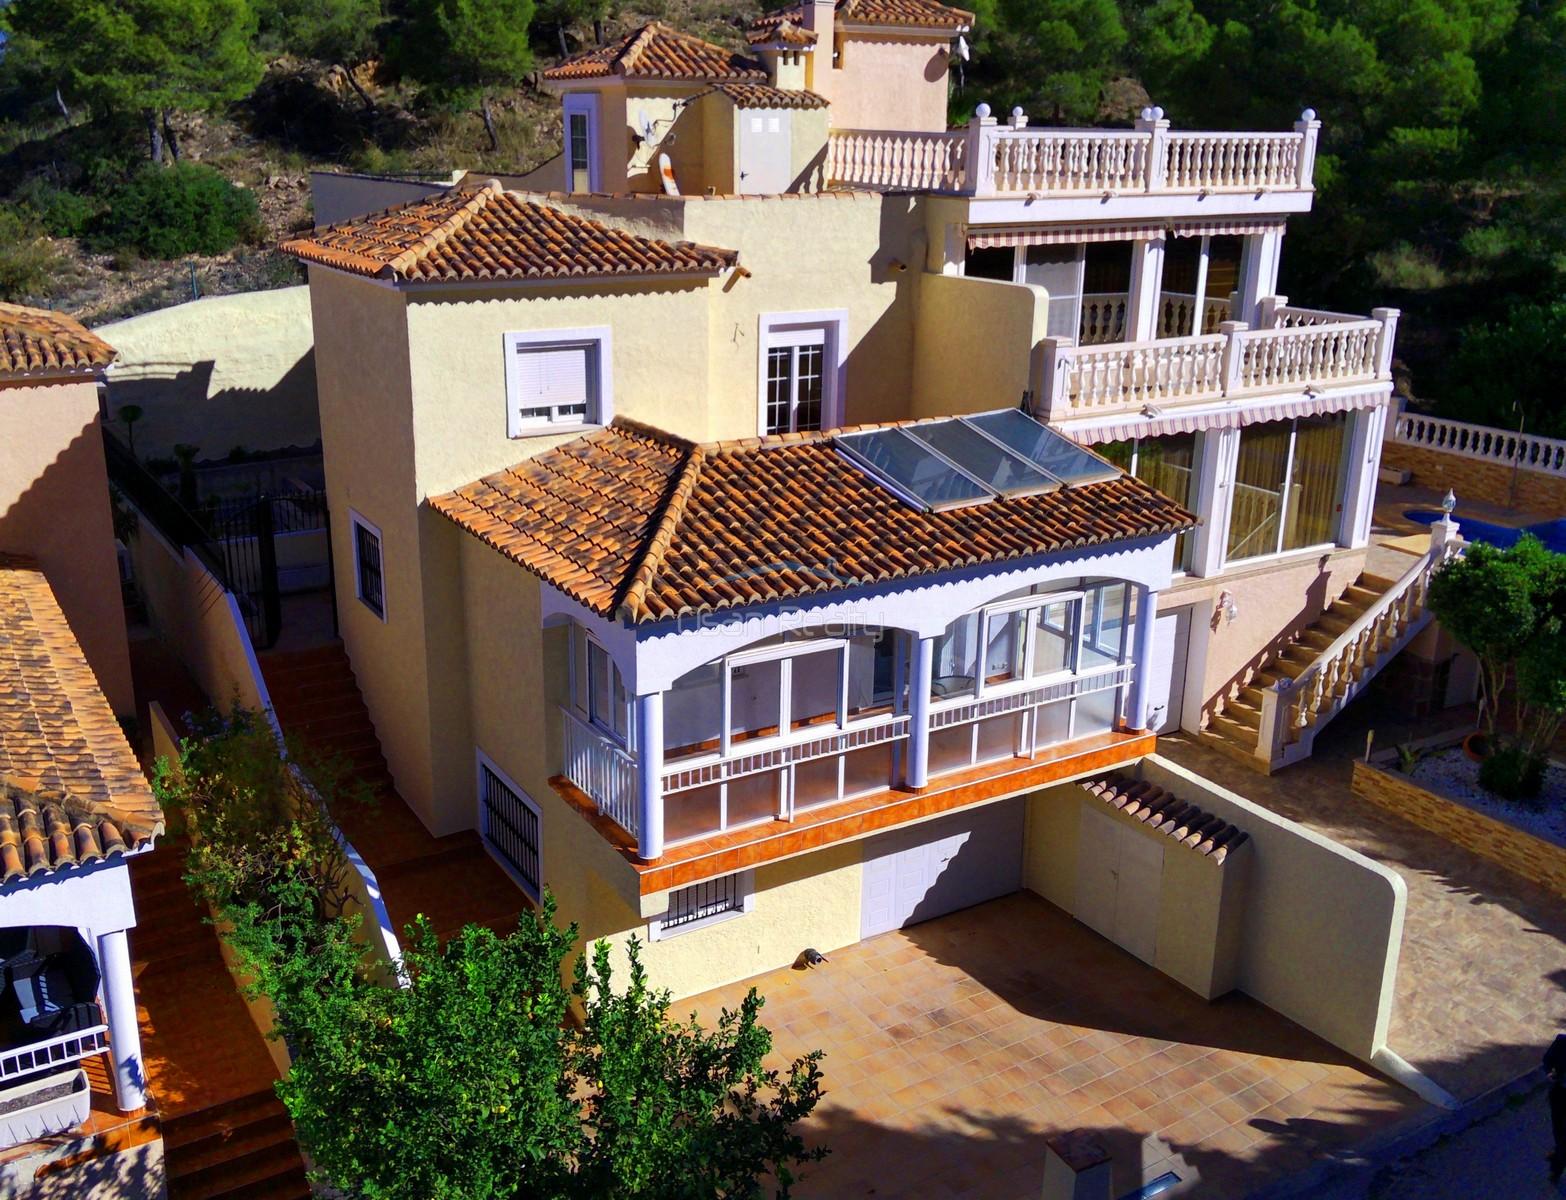 Salg av hus i Alfaz del Pi